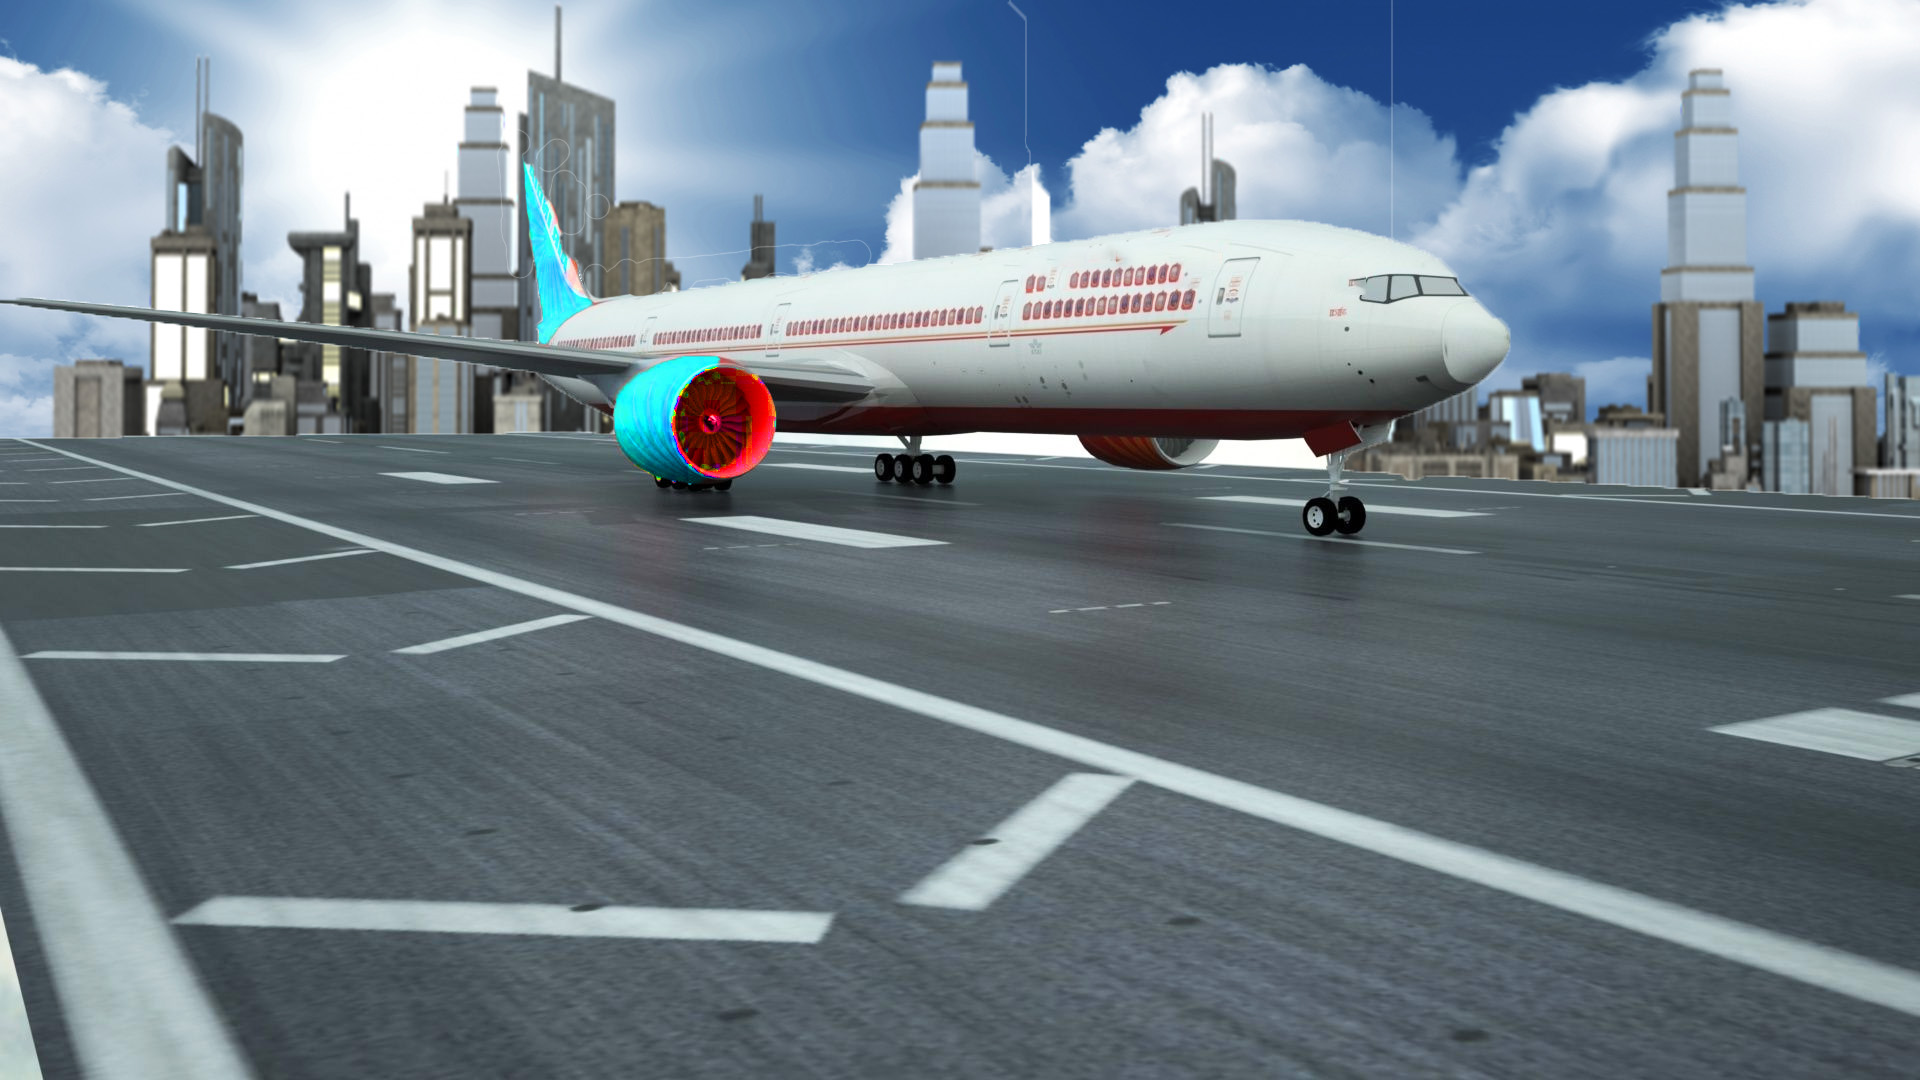 Download Flight Simulator - Plane Games on PC with MEmu